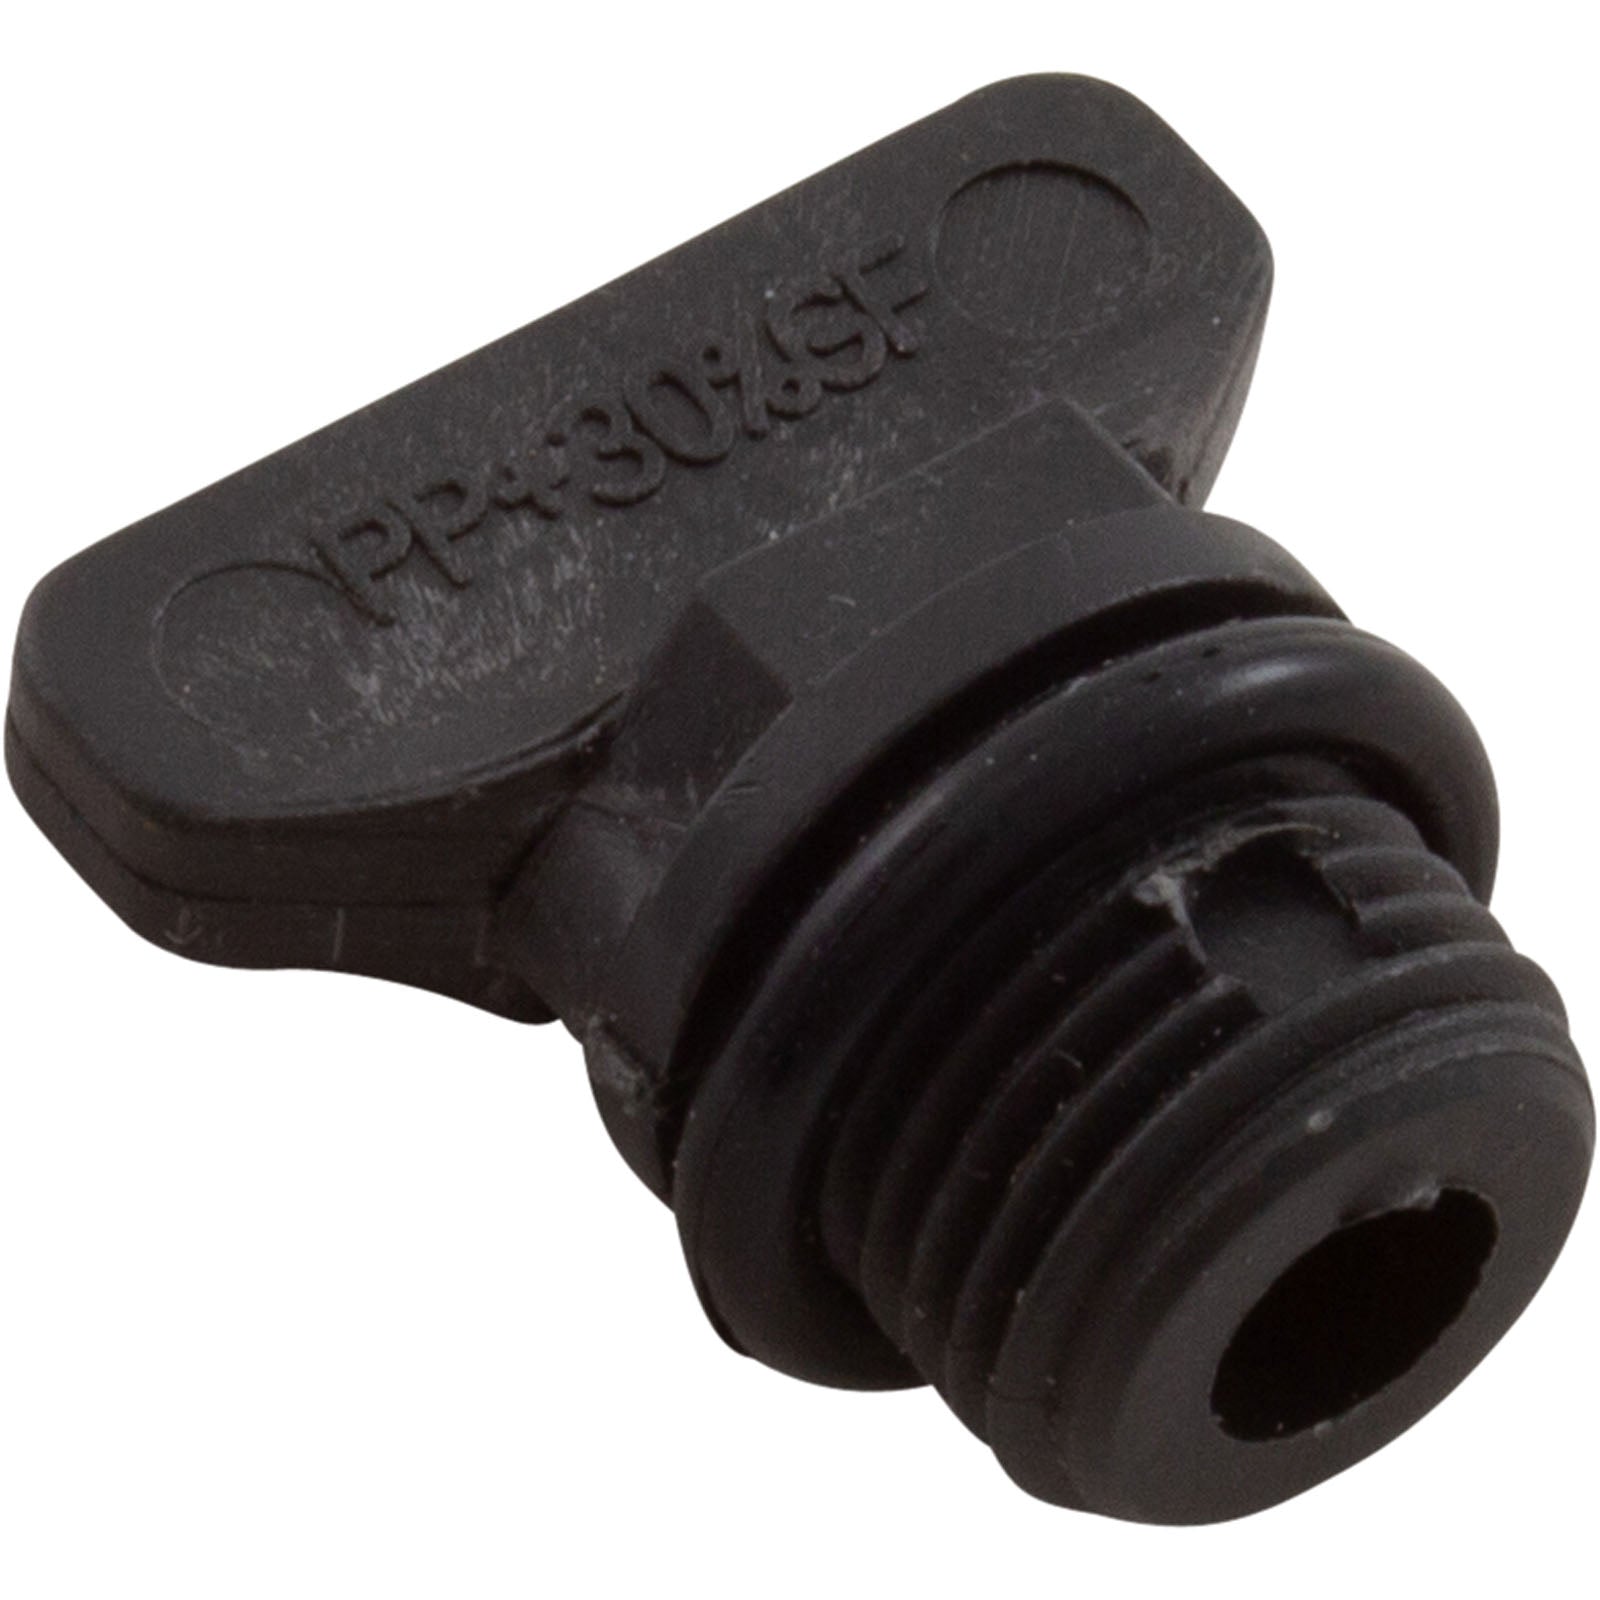 Drain Plug with O-ring, Raypak 018231F